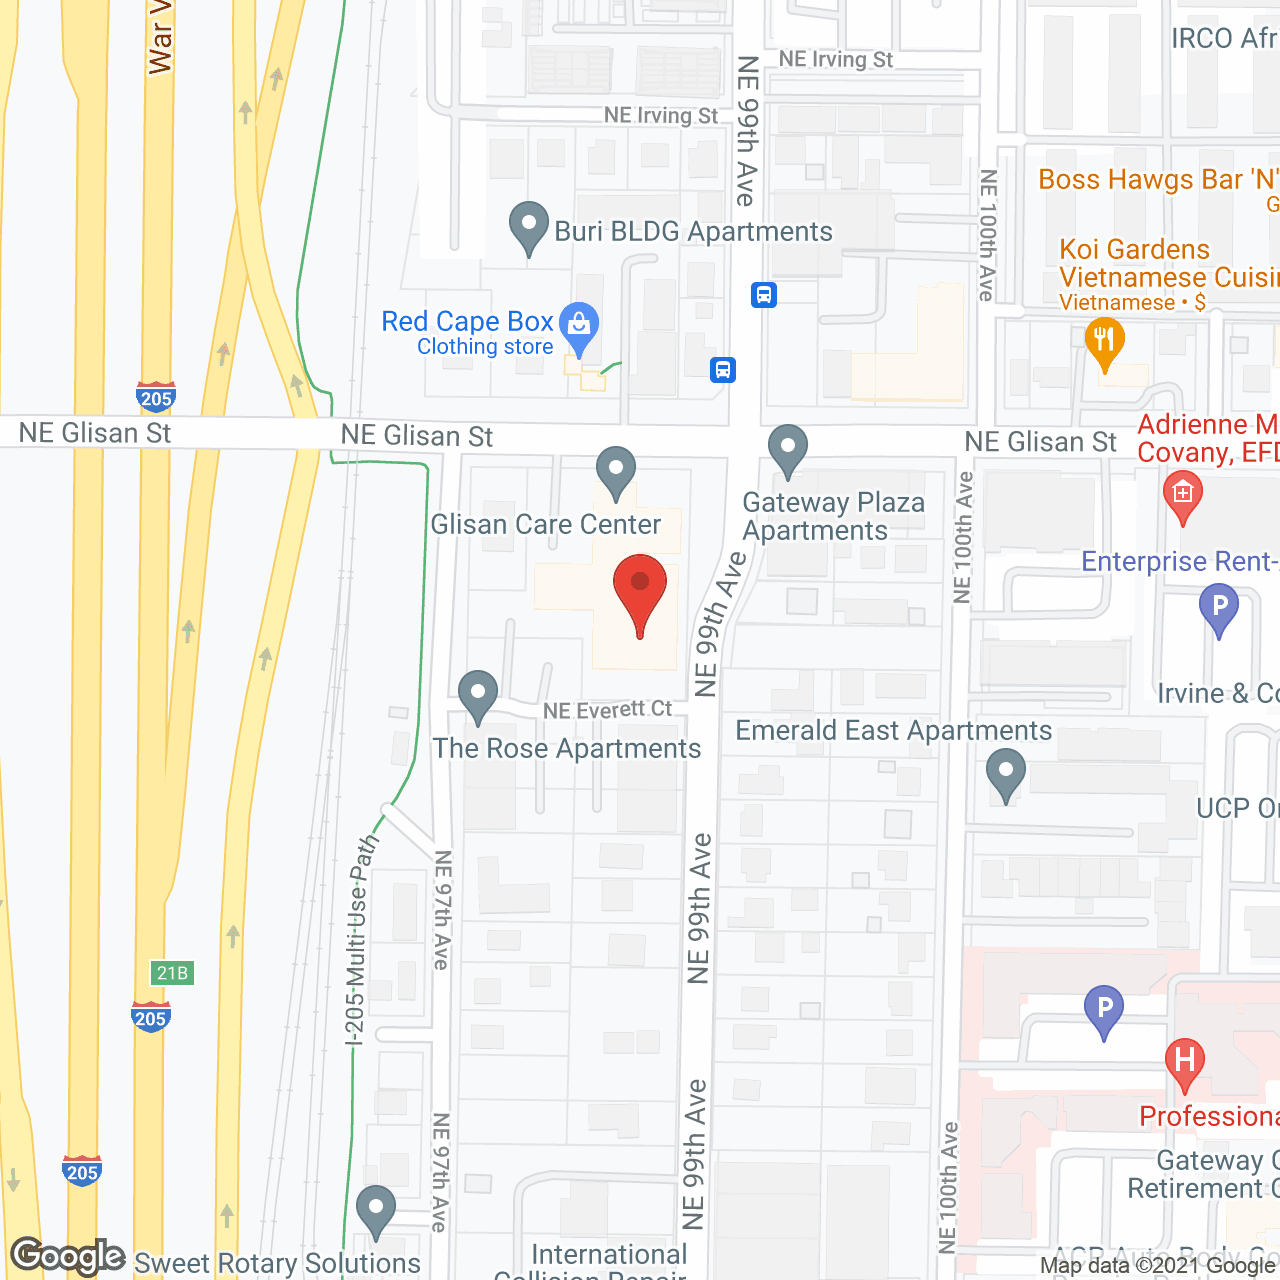 Glisan Care Center in google map